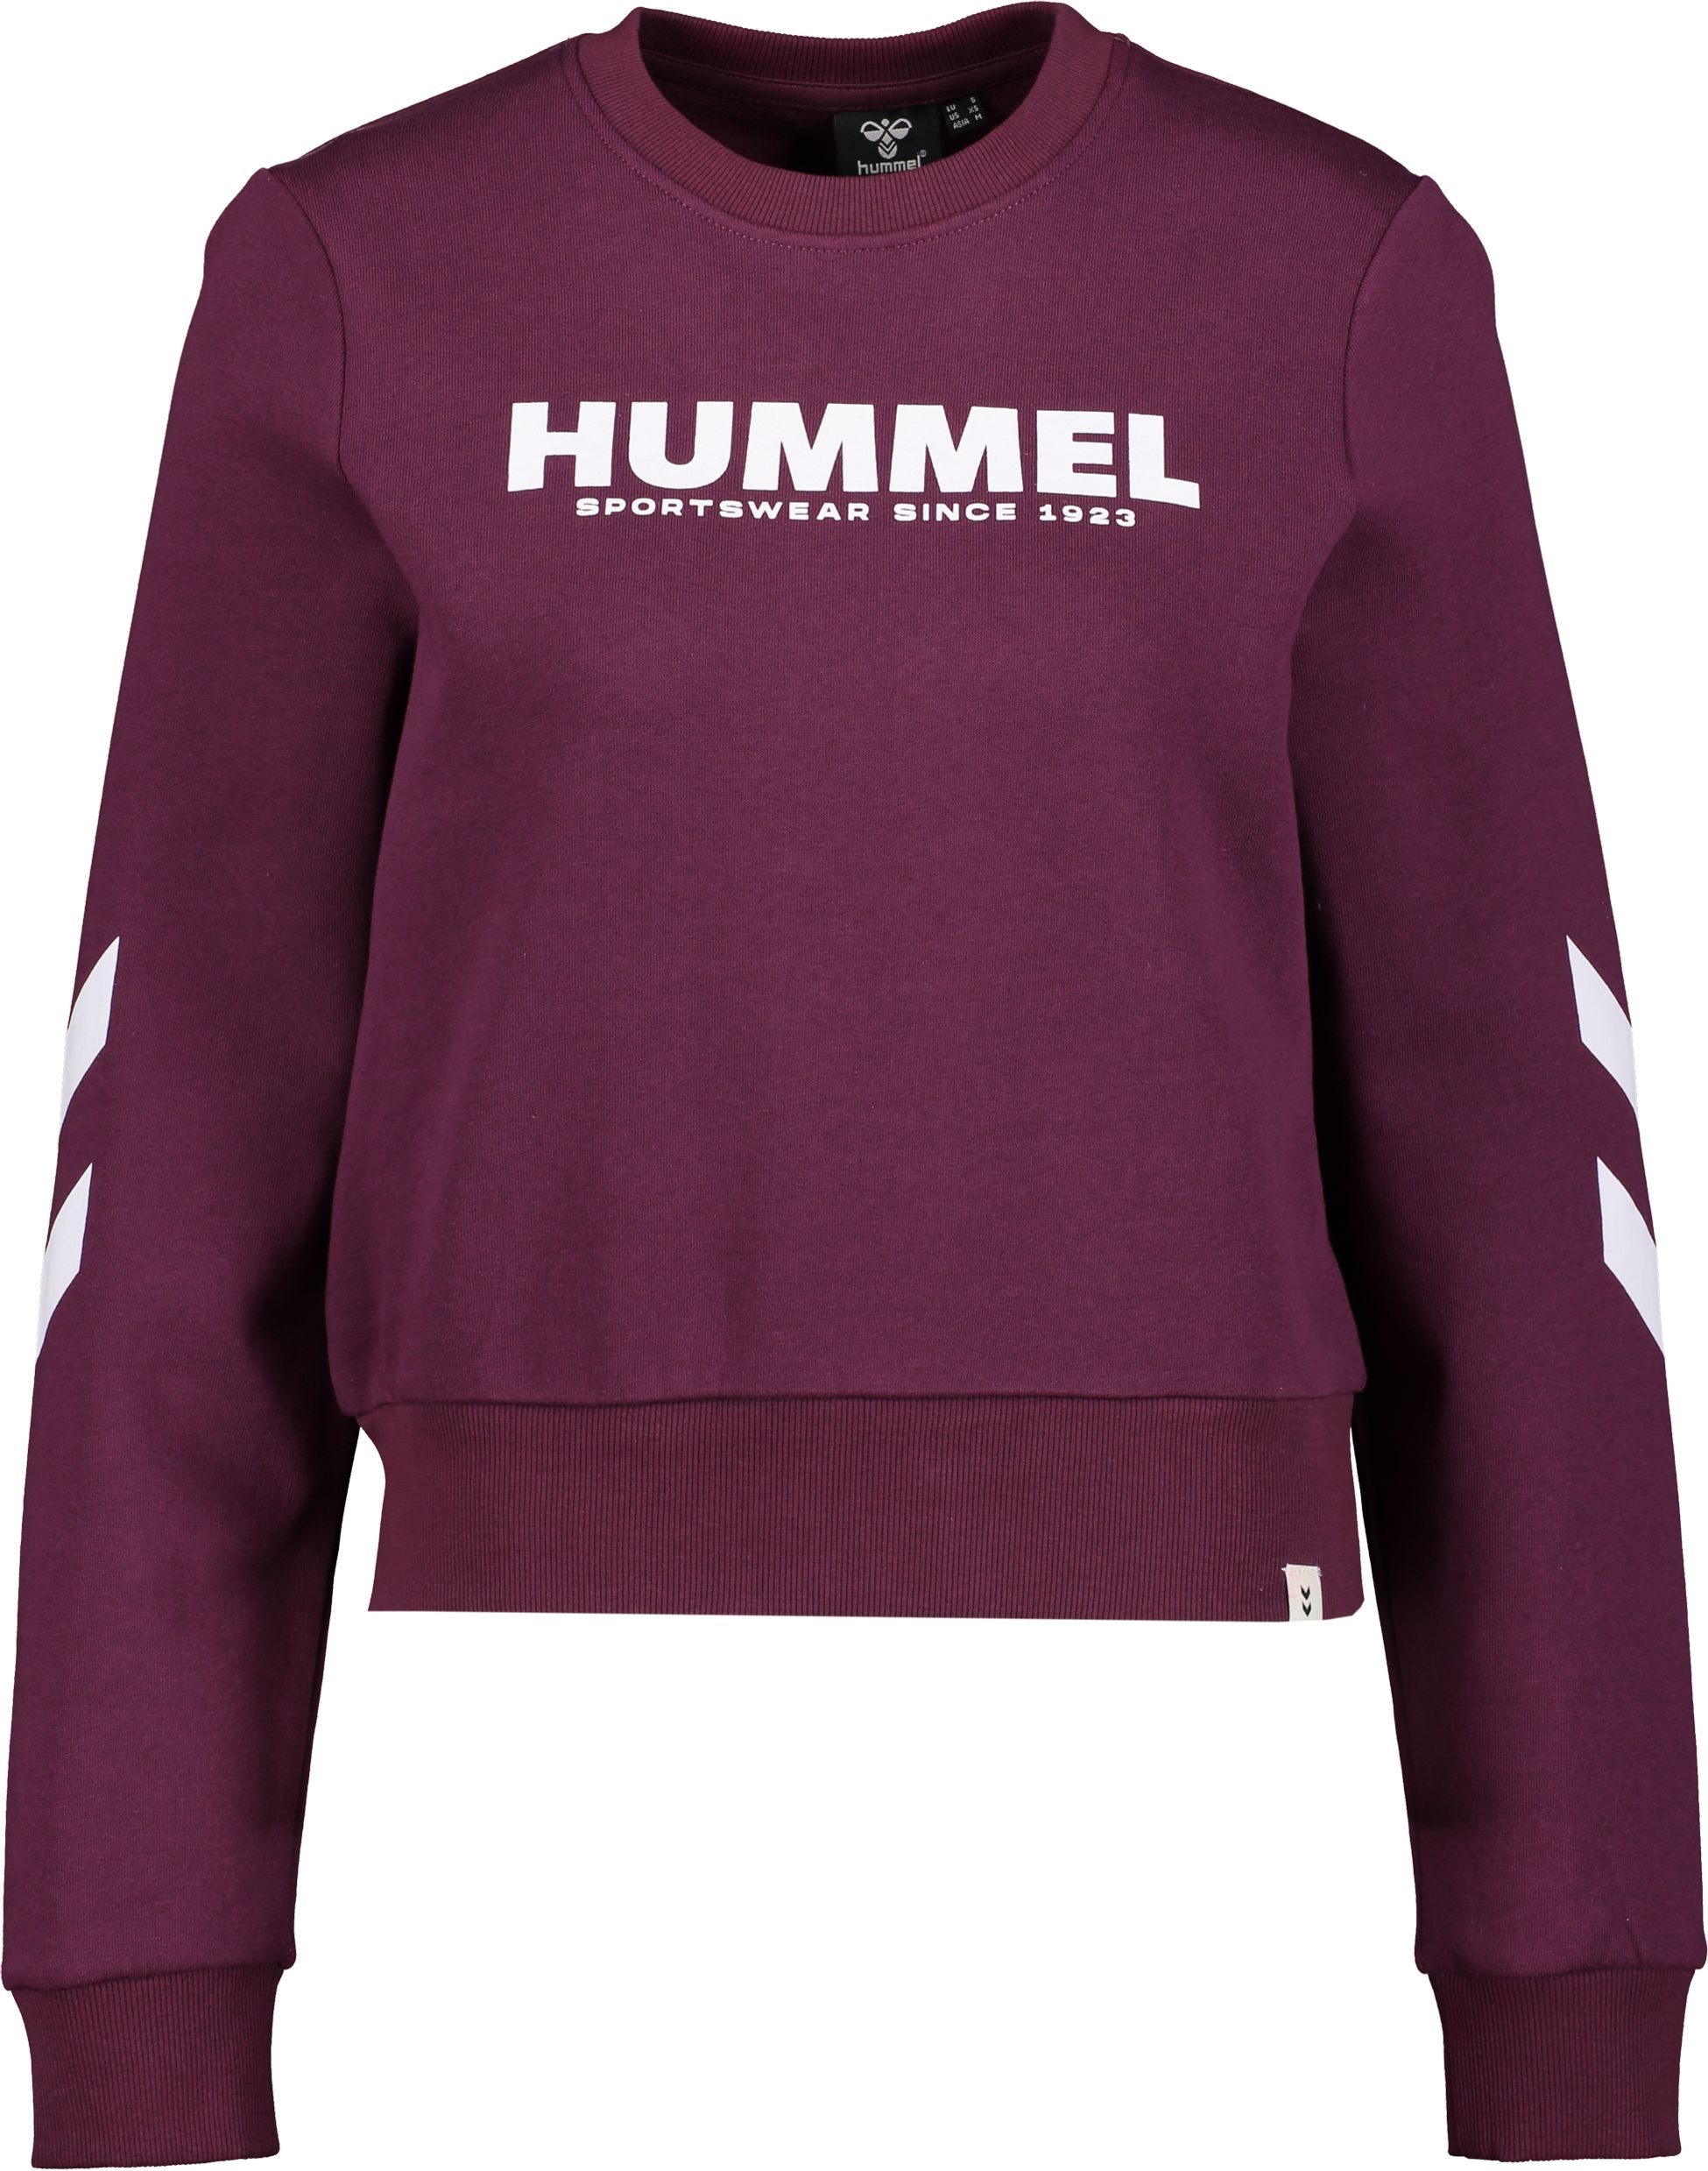 HUMMEL, LEGACY SWEATSHIRT W